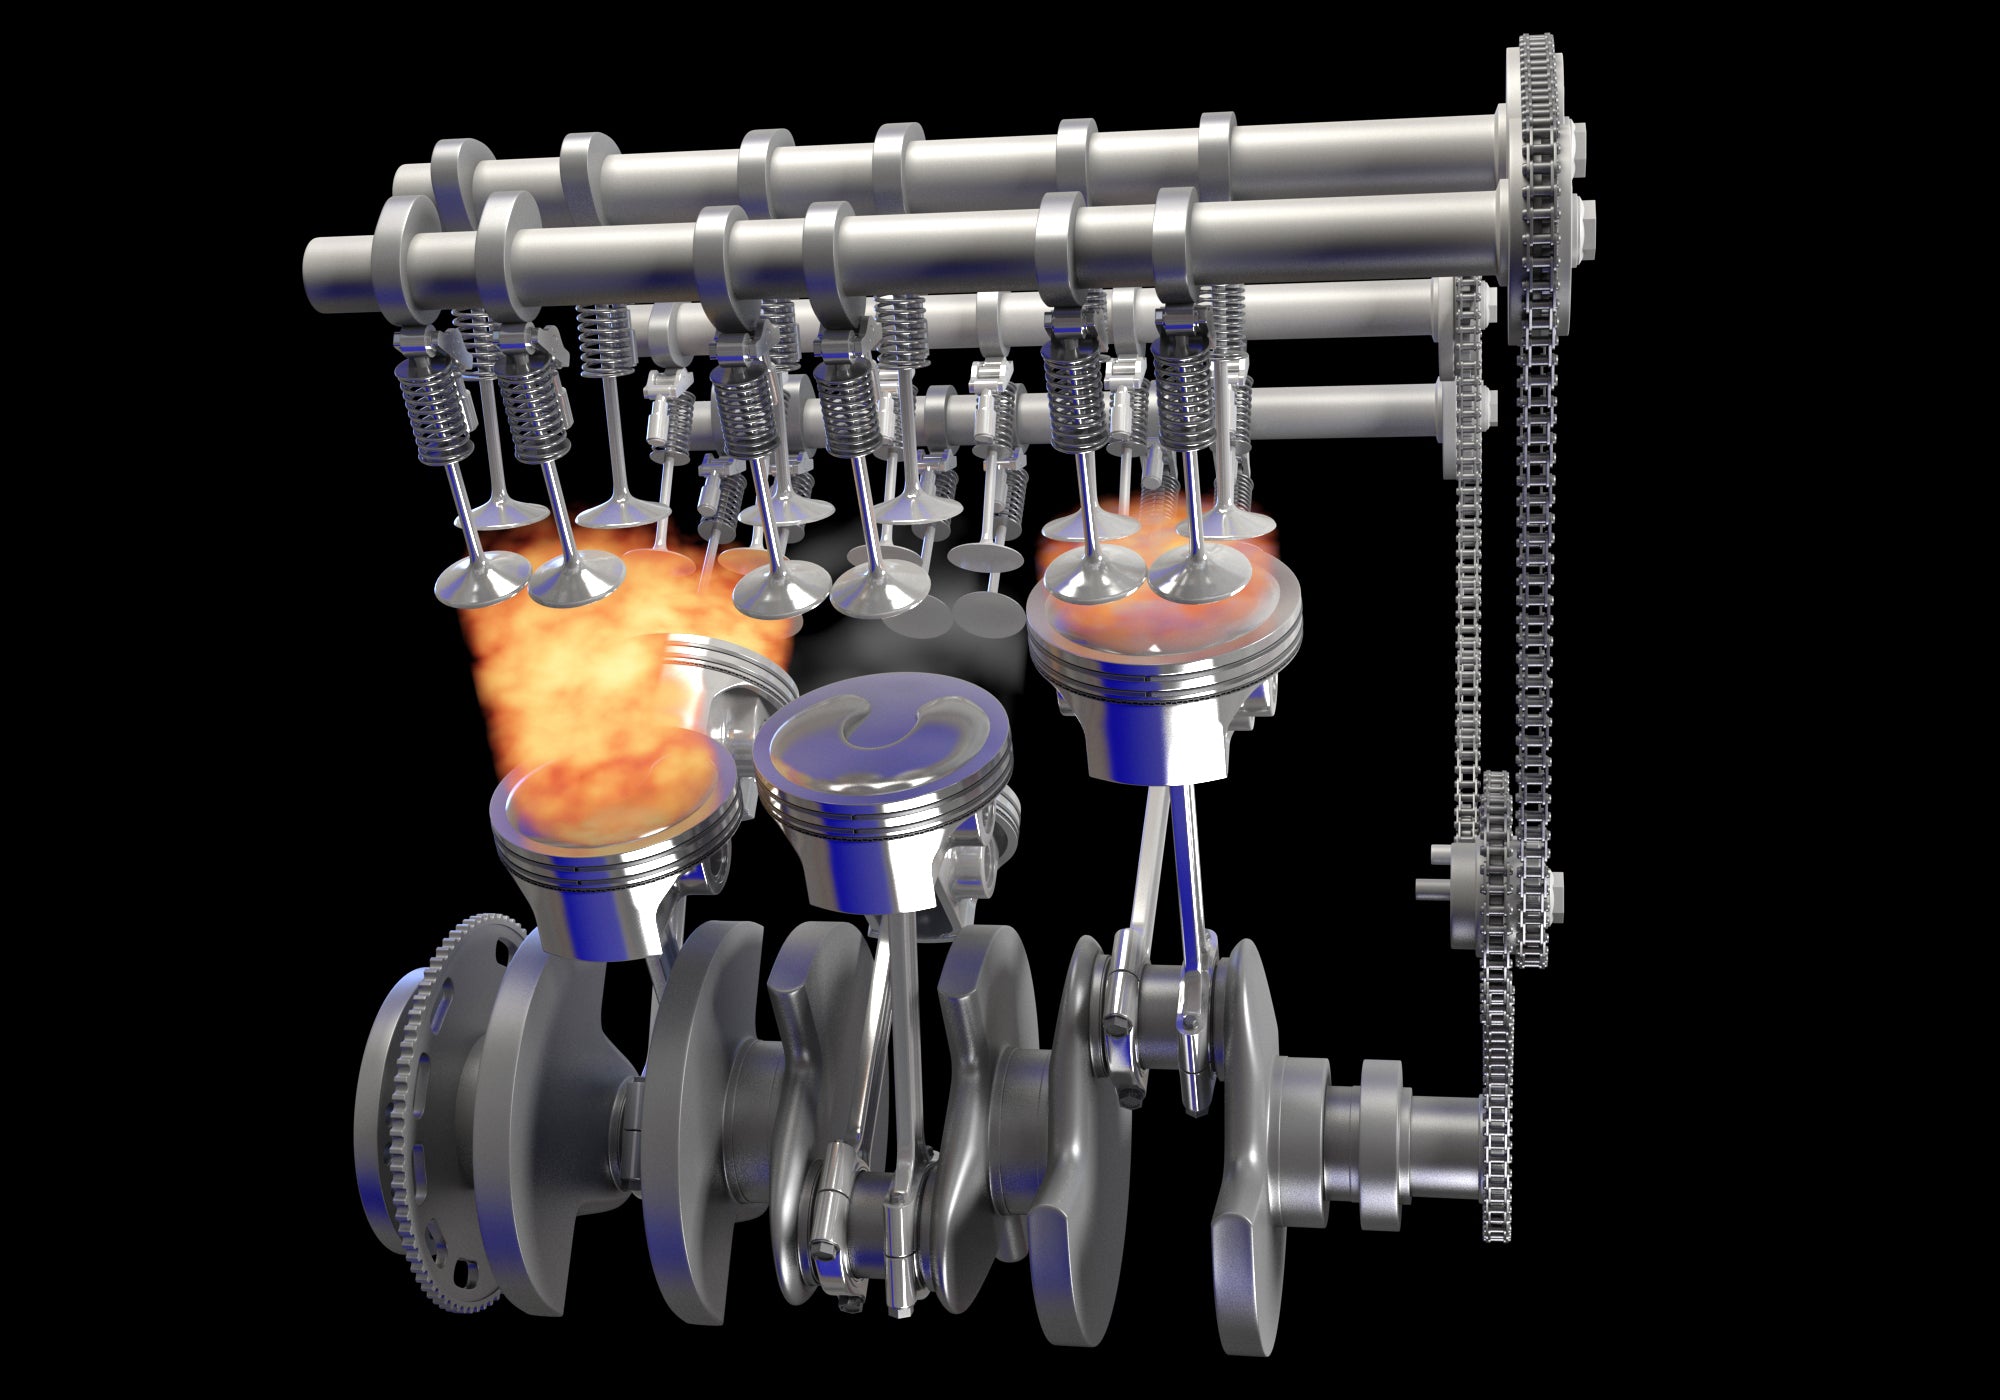 V6 Engine with Gasoline Ignition - 3D Model by 3D Horse